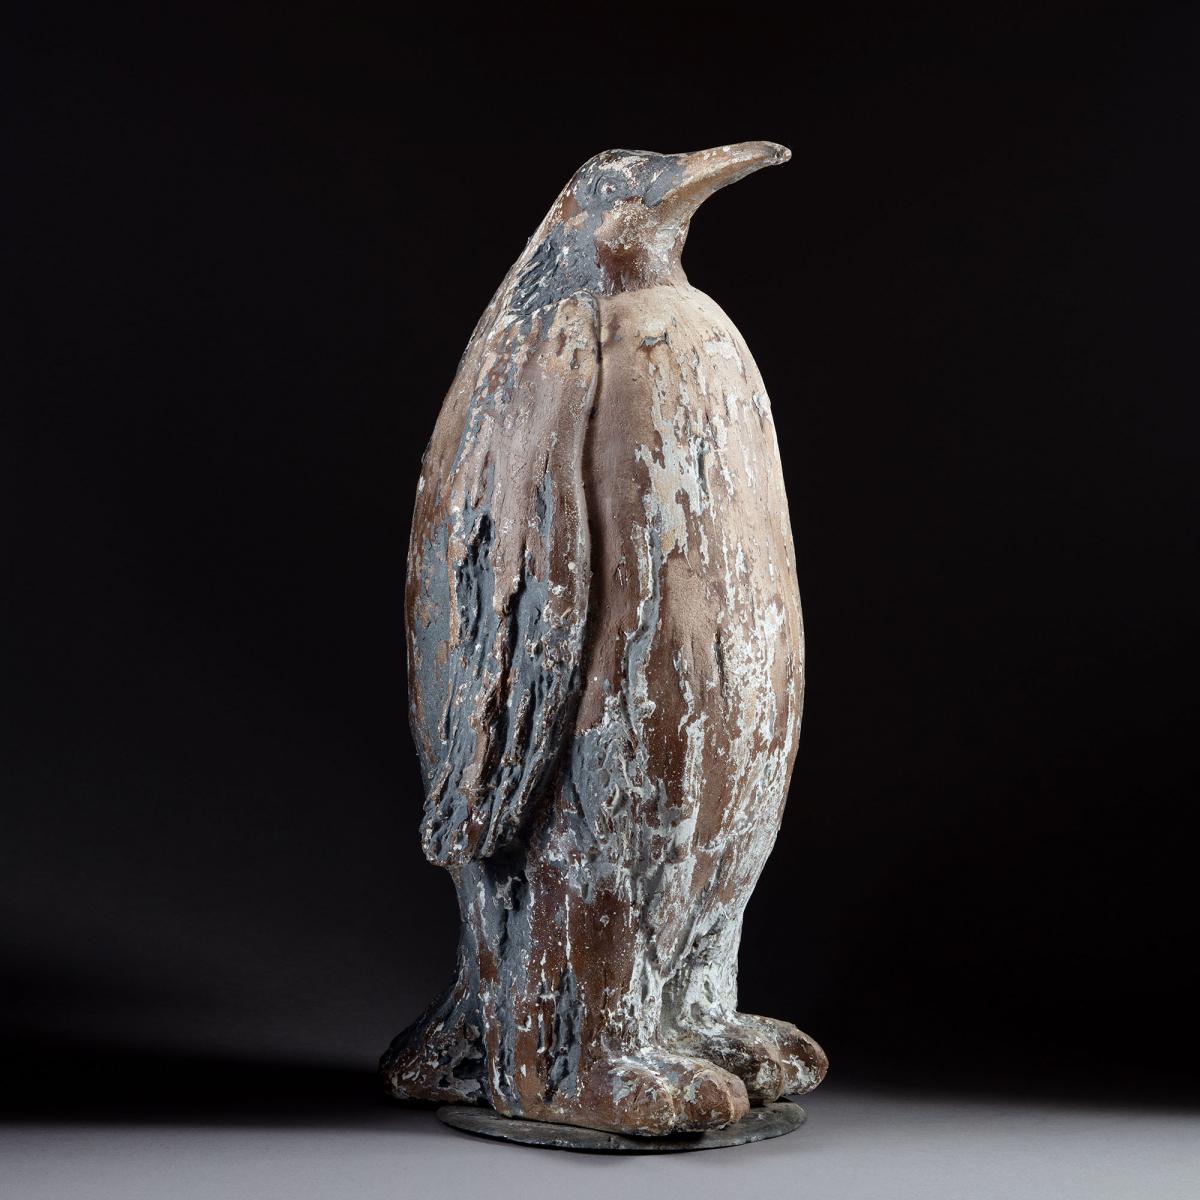 An Unusual Plaster Sculpture of an Emperor Penguin